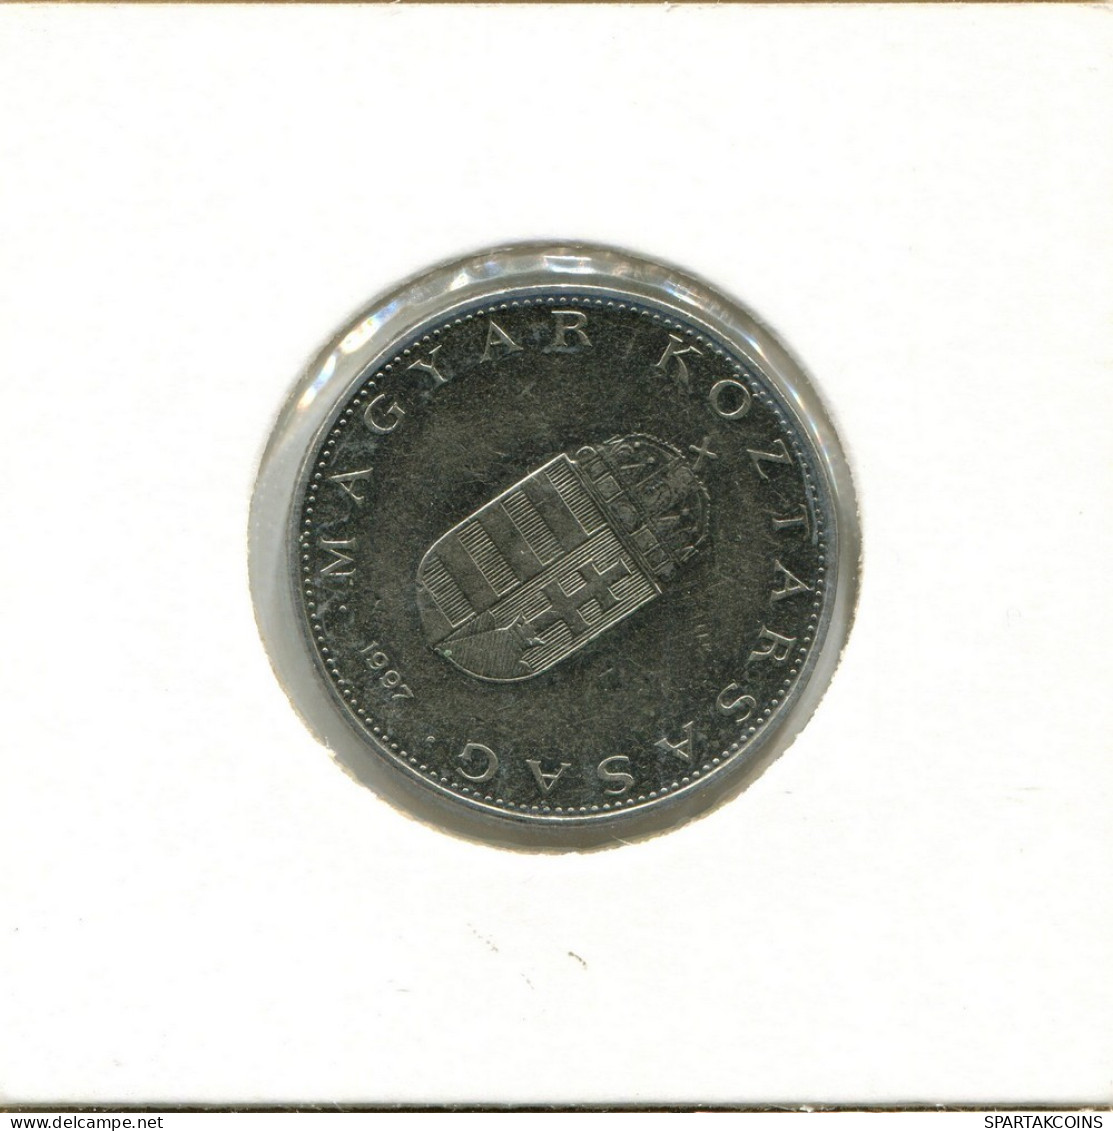 10 FORINT 1997 HUNGARY Coin #AY527.U.A - Ungarn